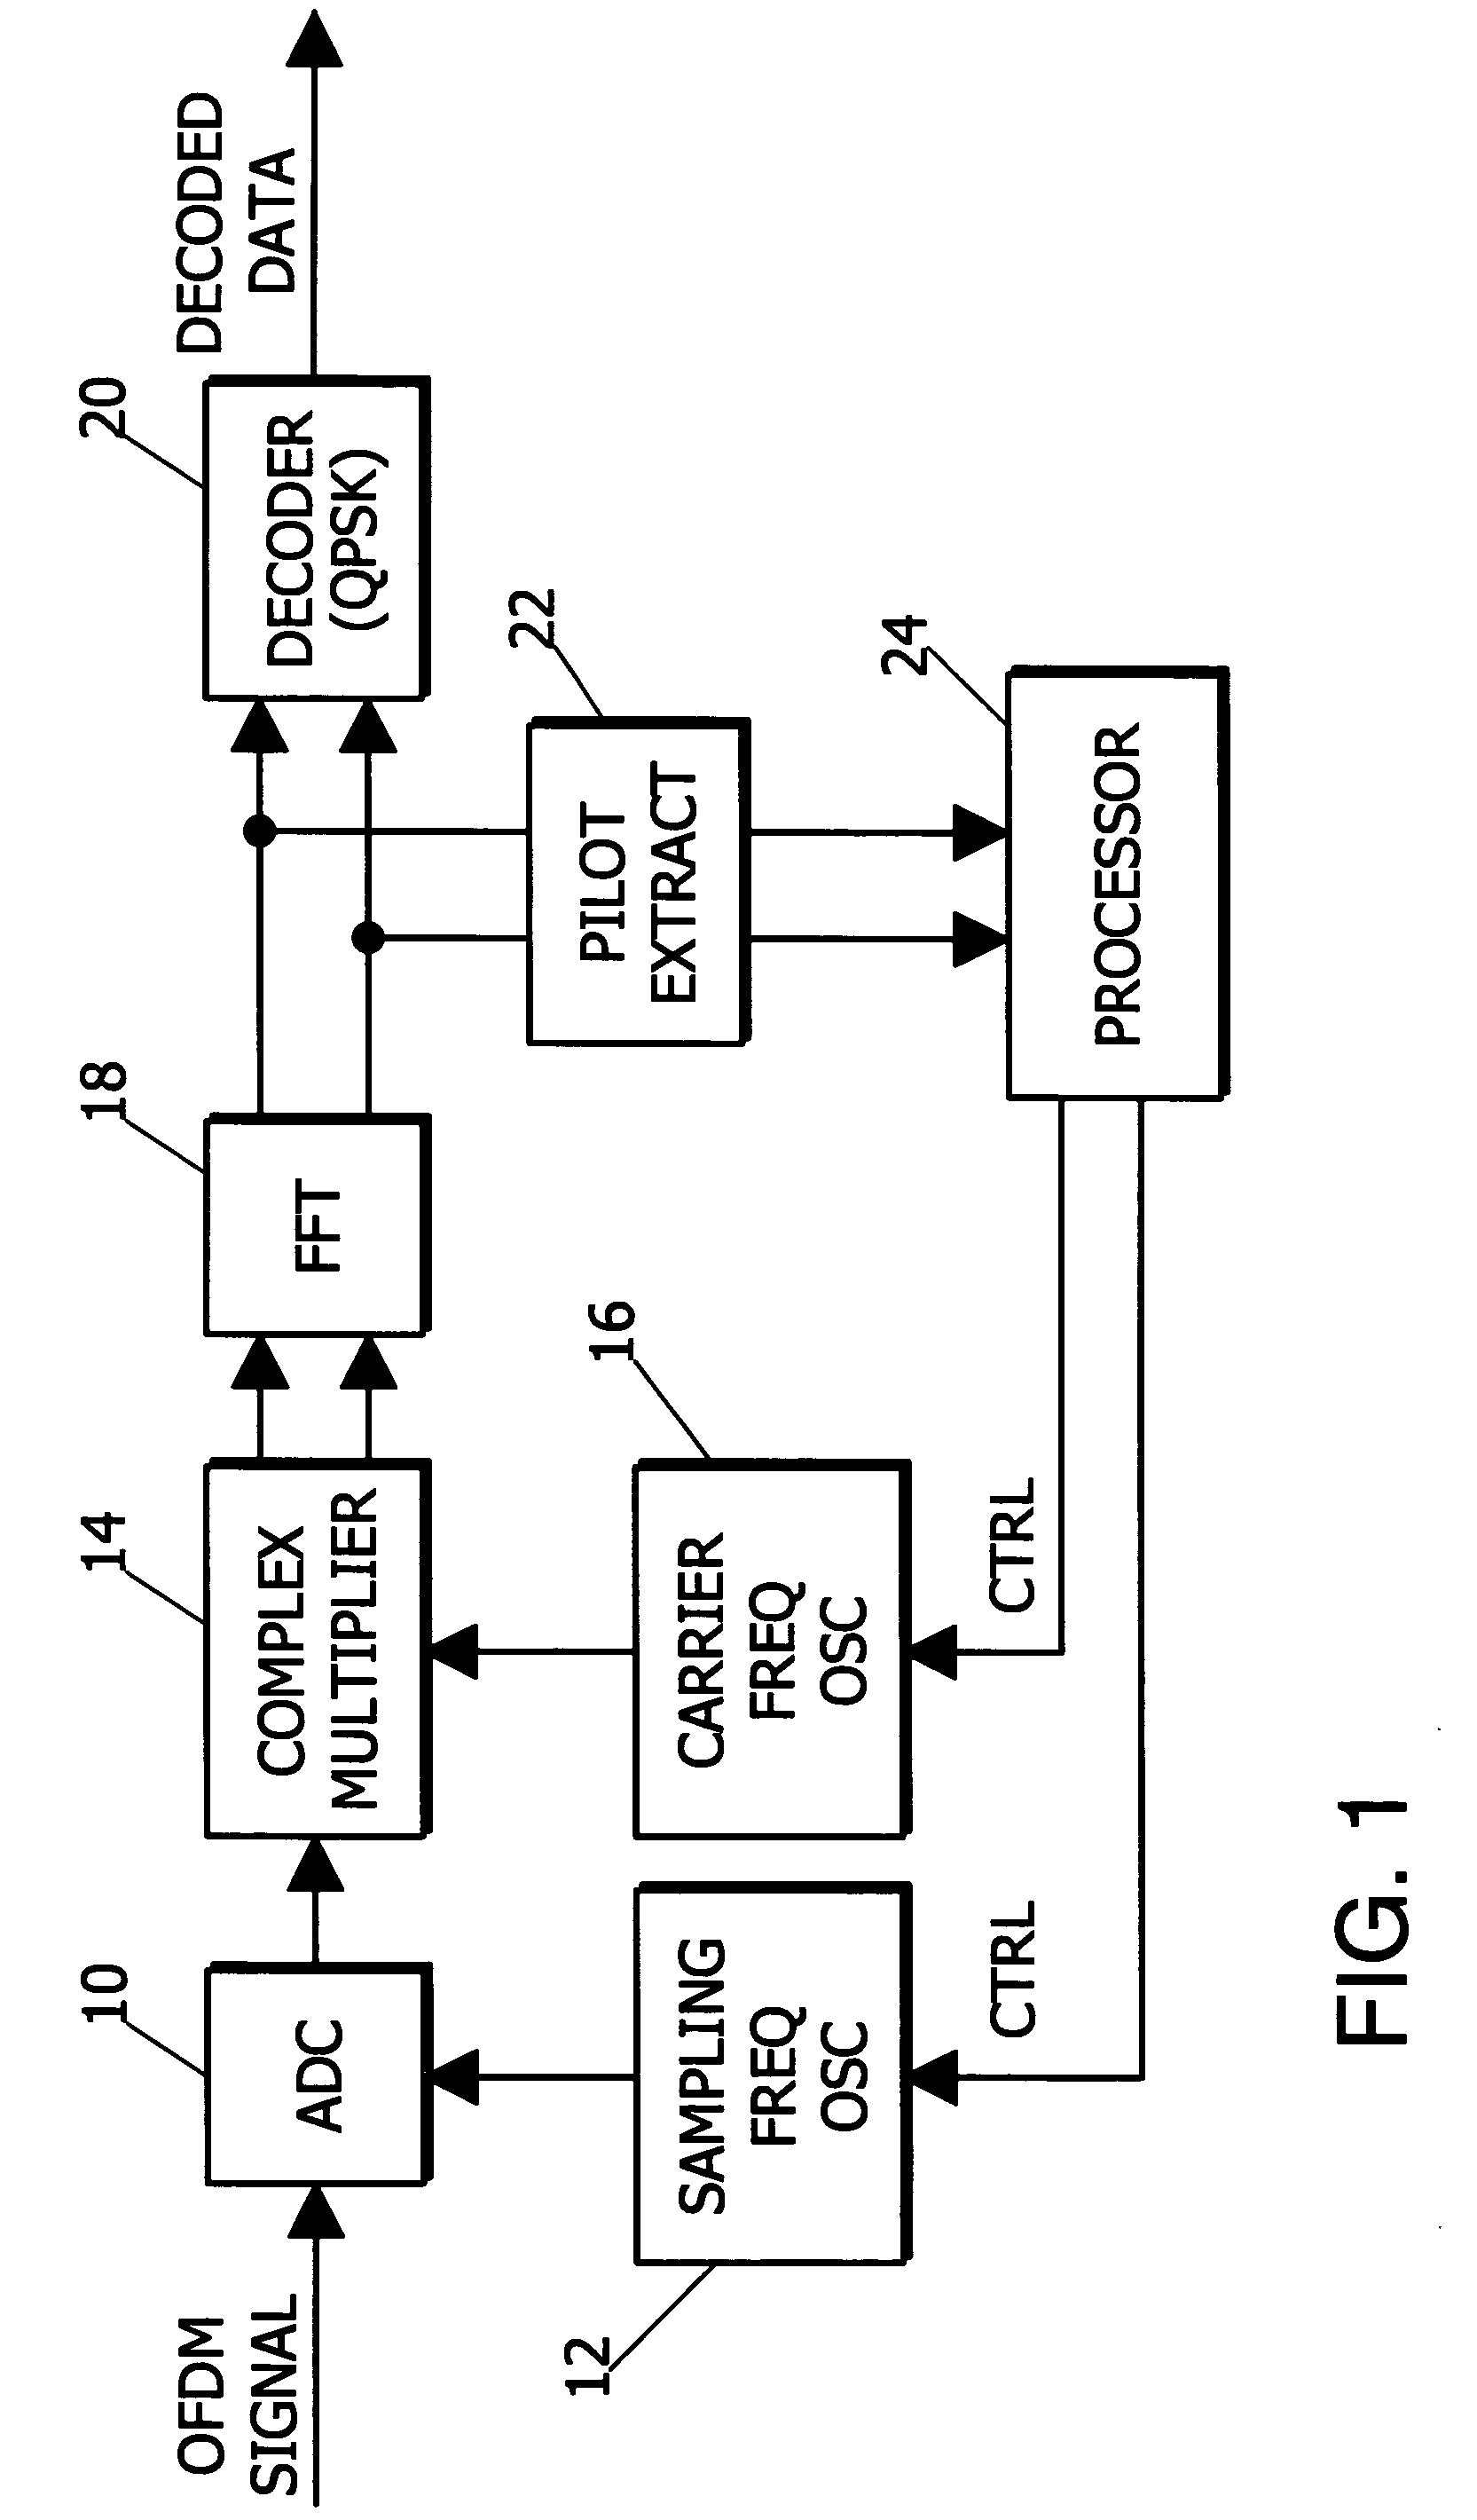 Digital signal demodulation of an OFDM signal with error correction